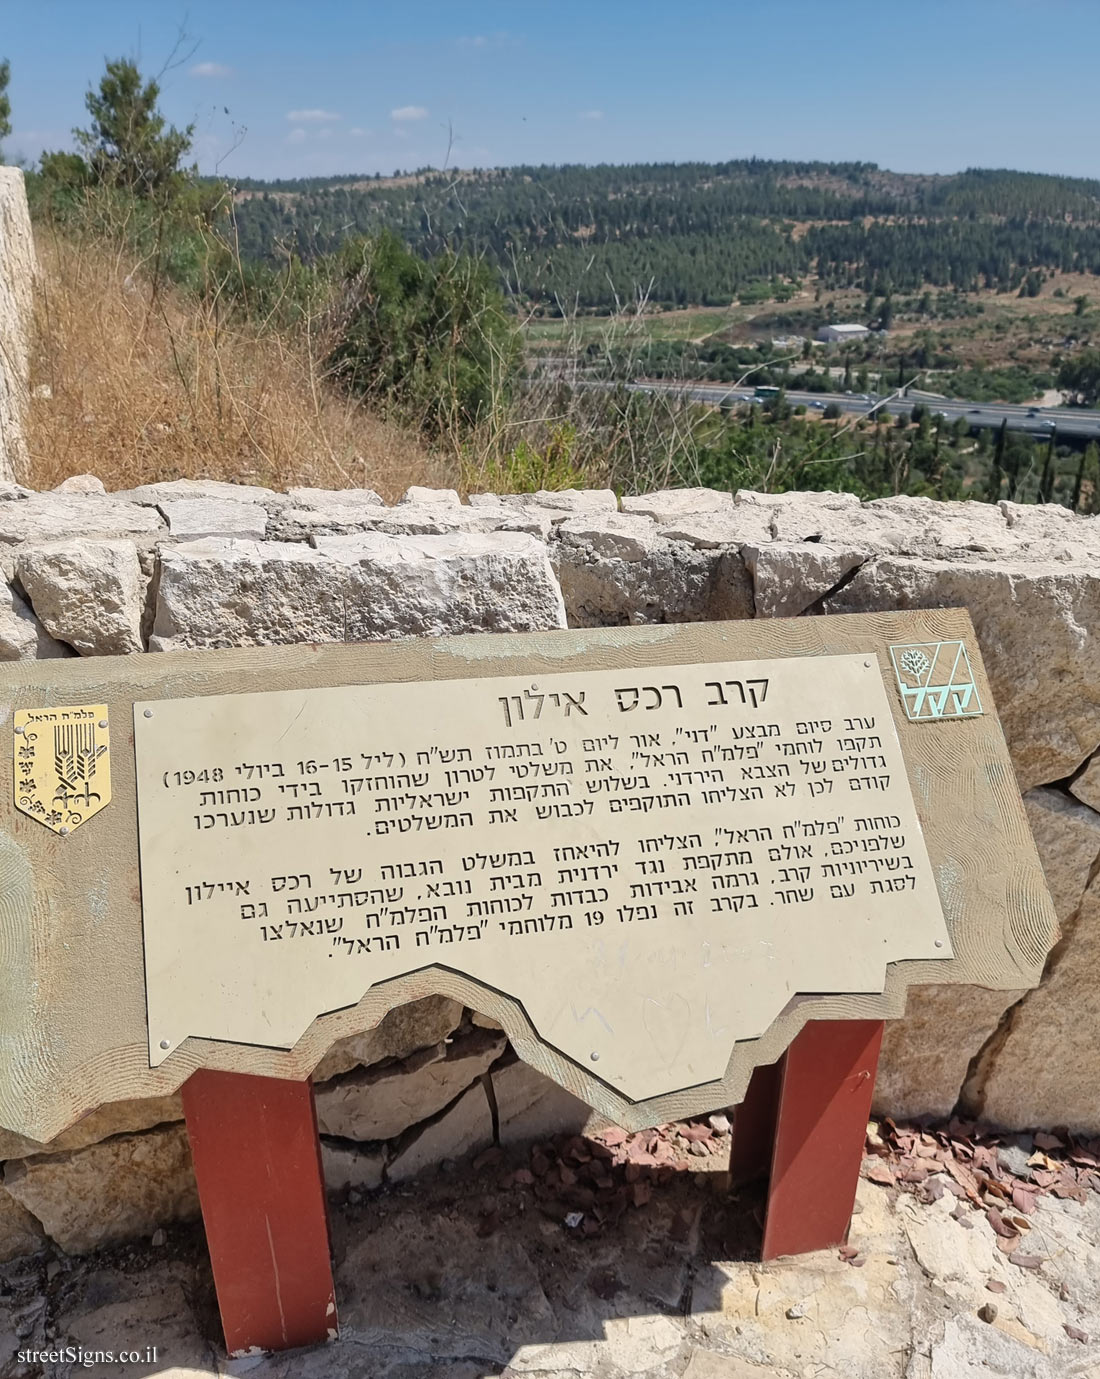 The Harel Brigade observatory, Mateh Yehuda Regional Council, Israel